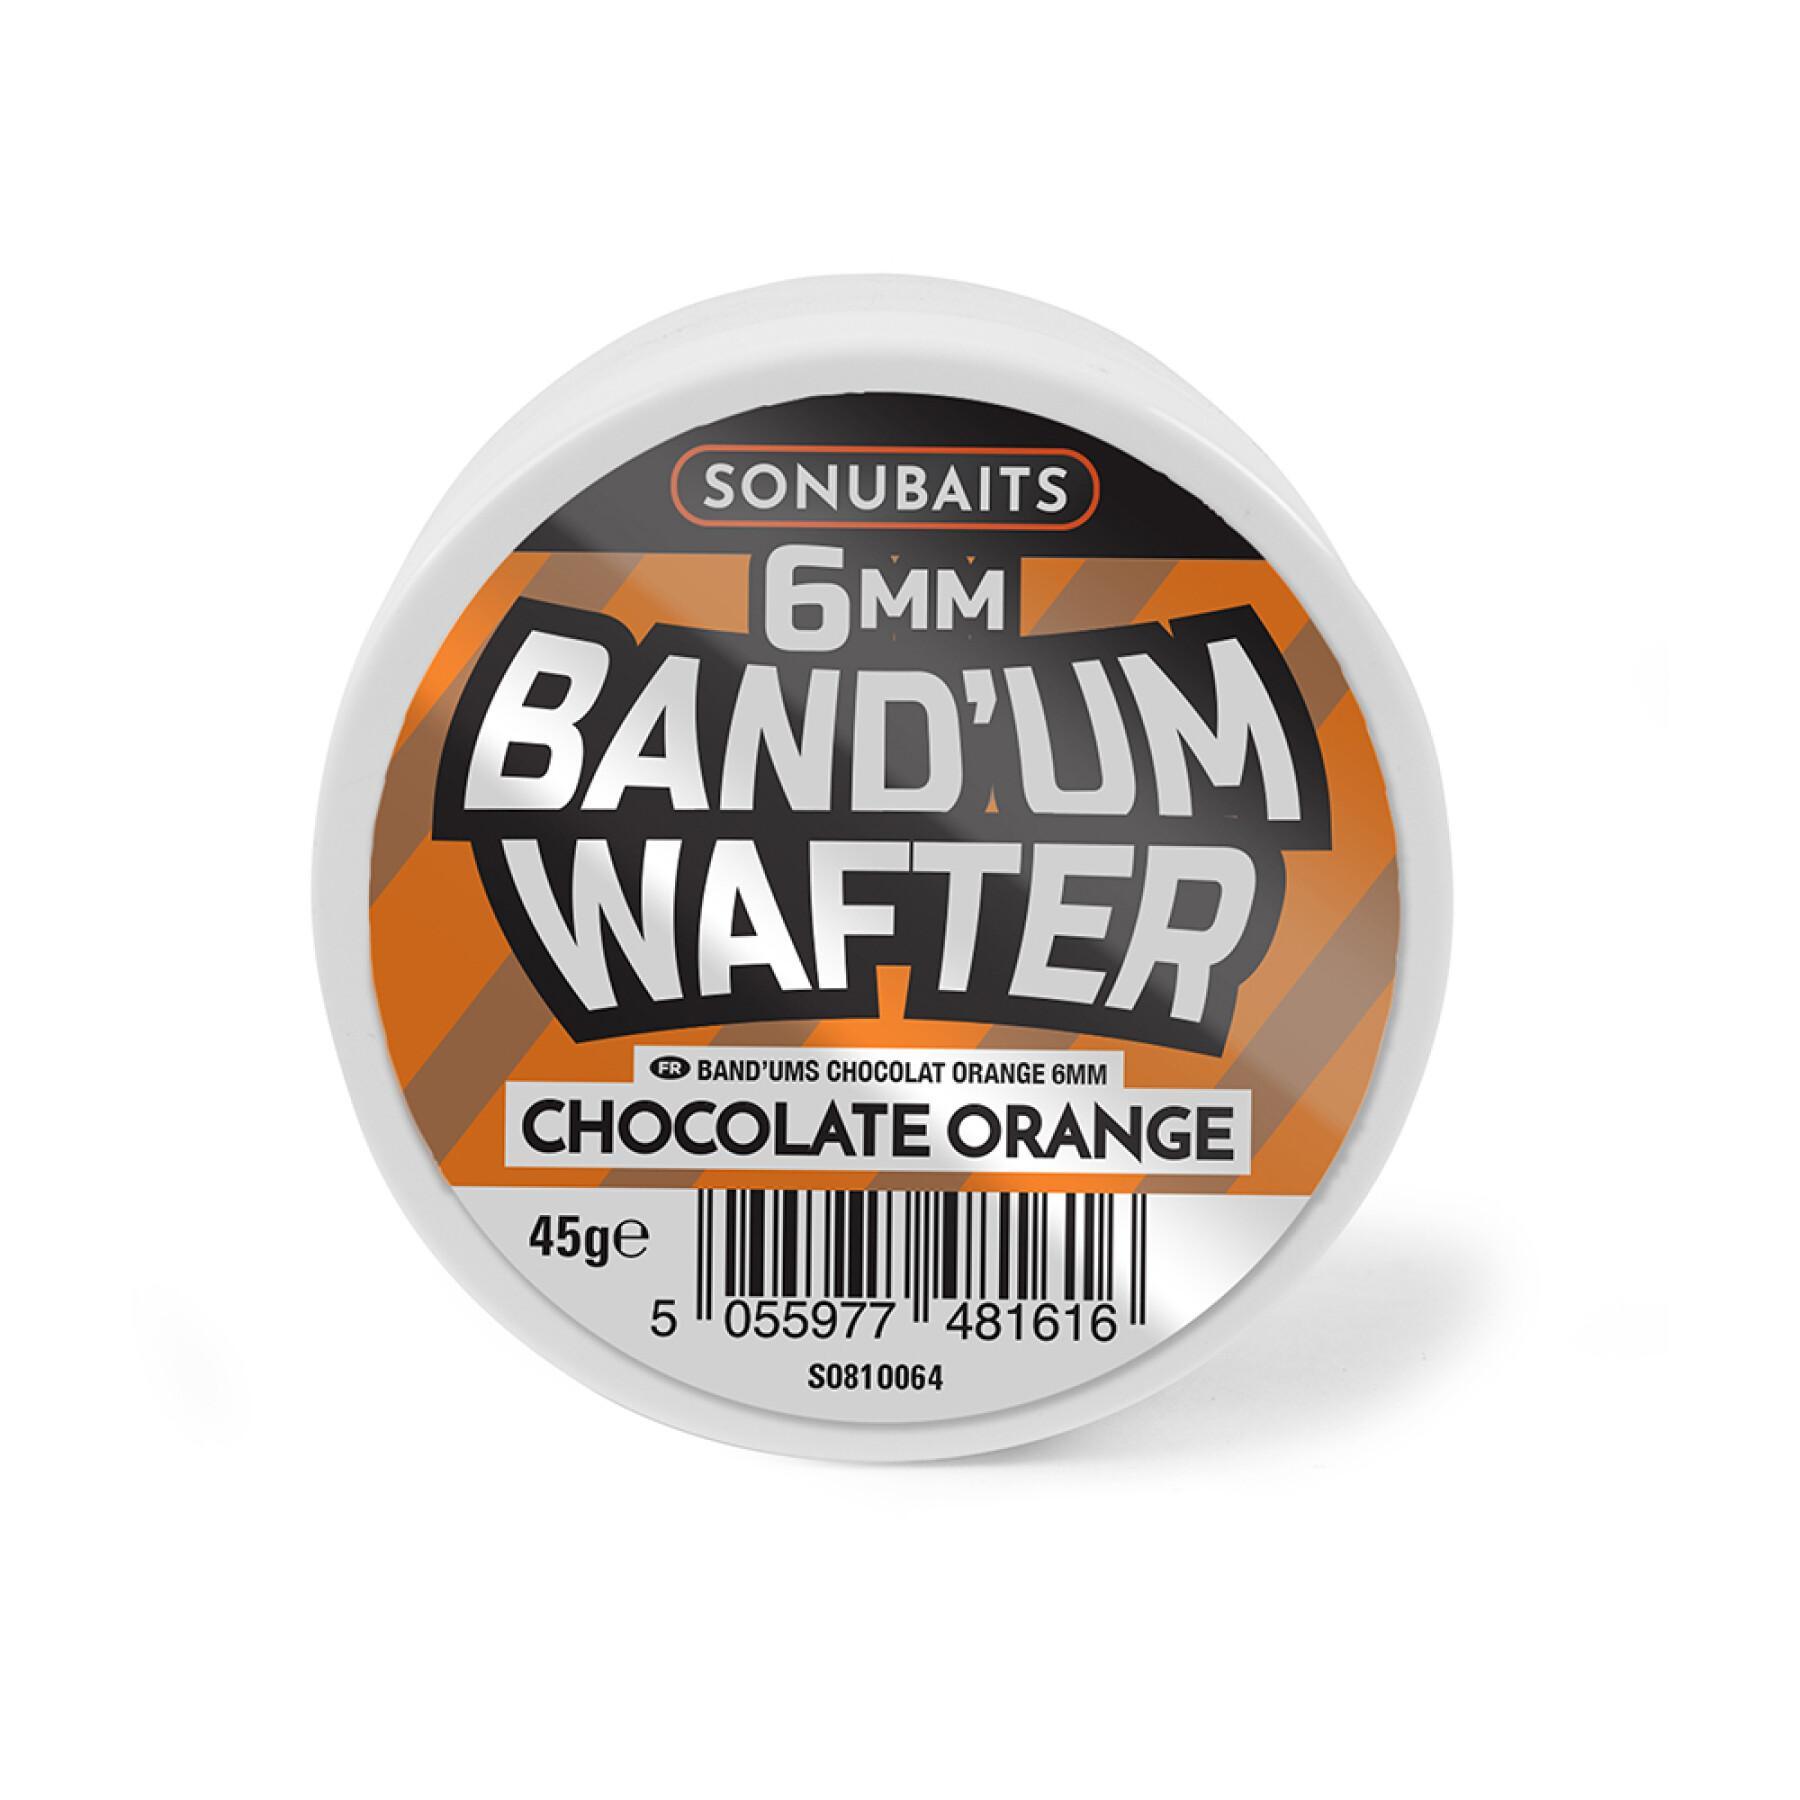 Aas Sonubaits band'um wafters - chocolate orange 1x8